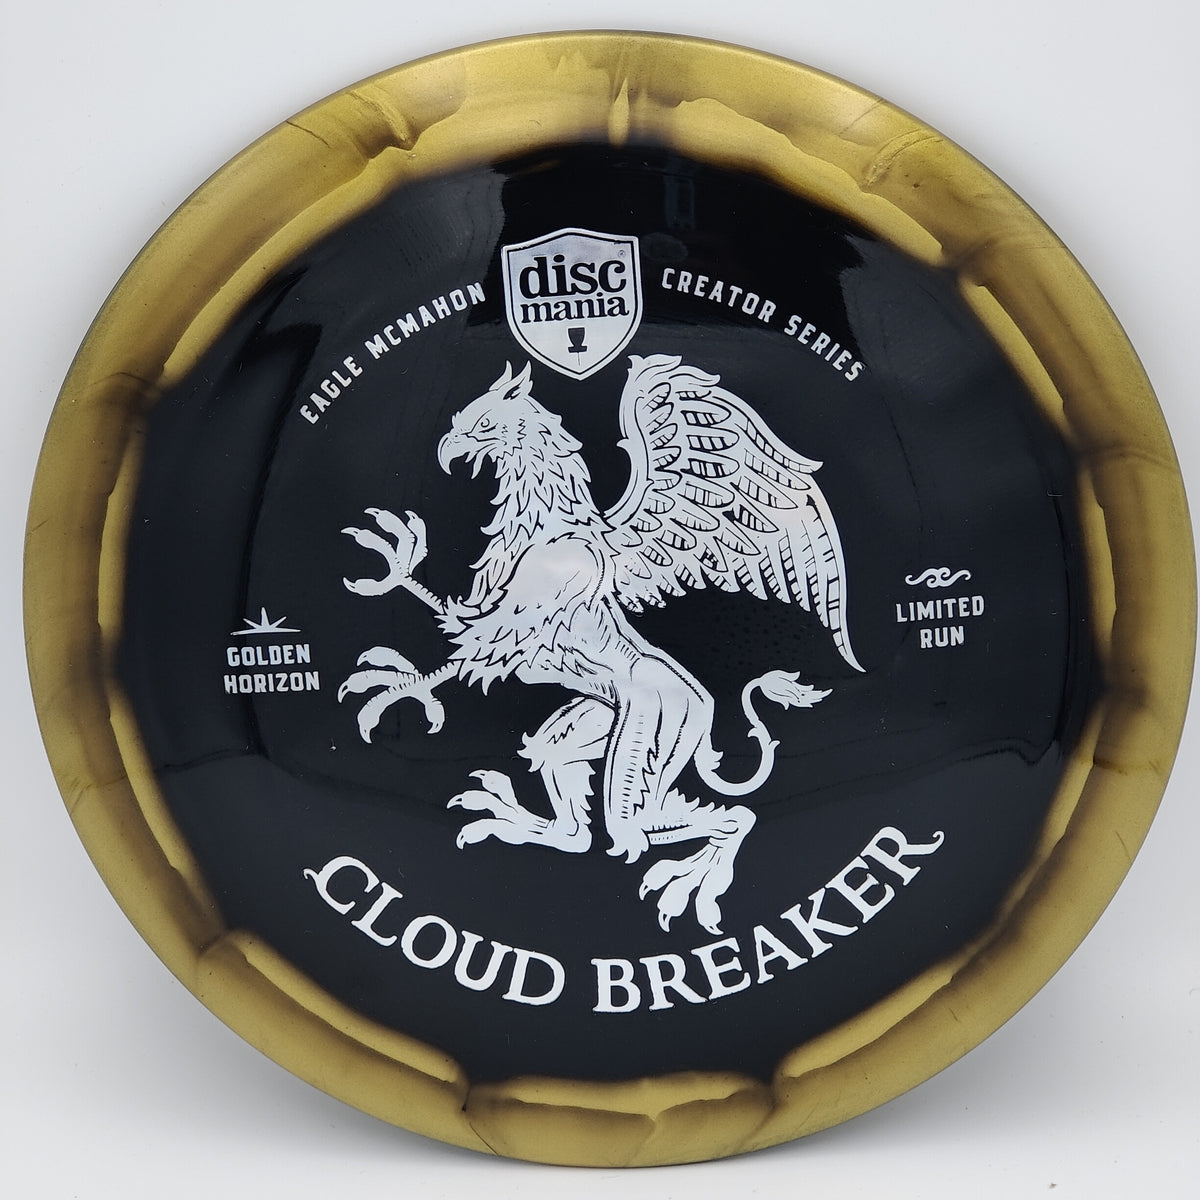 Discmania Cloudbreaker - Eagle McMahon Creator Series Golden Horizon